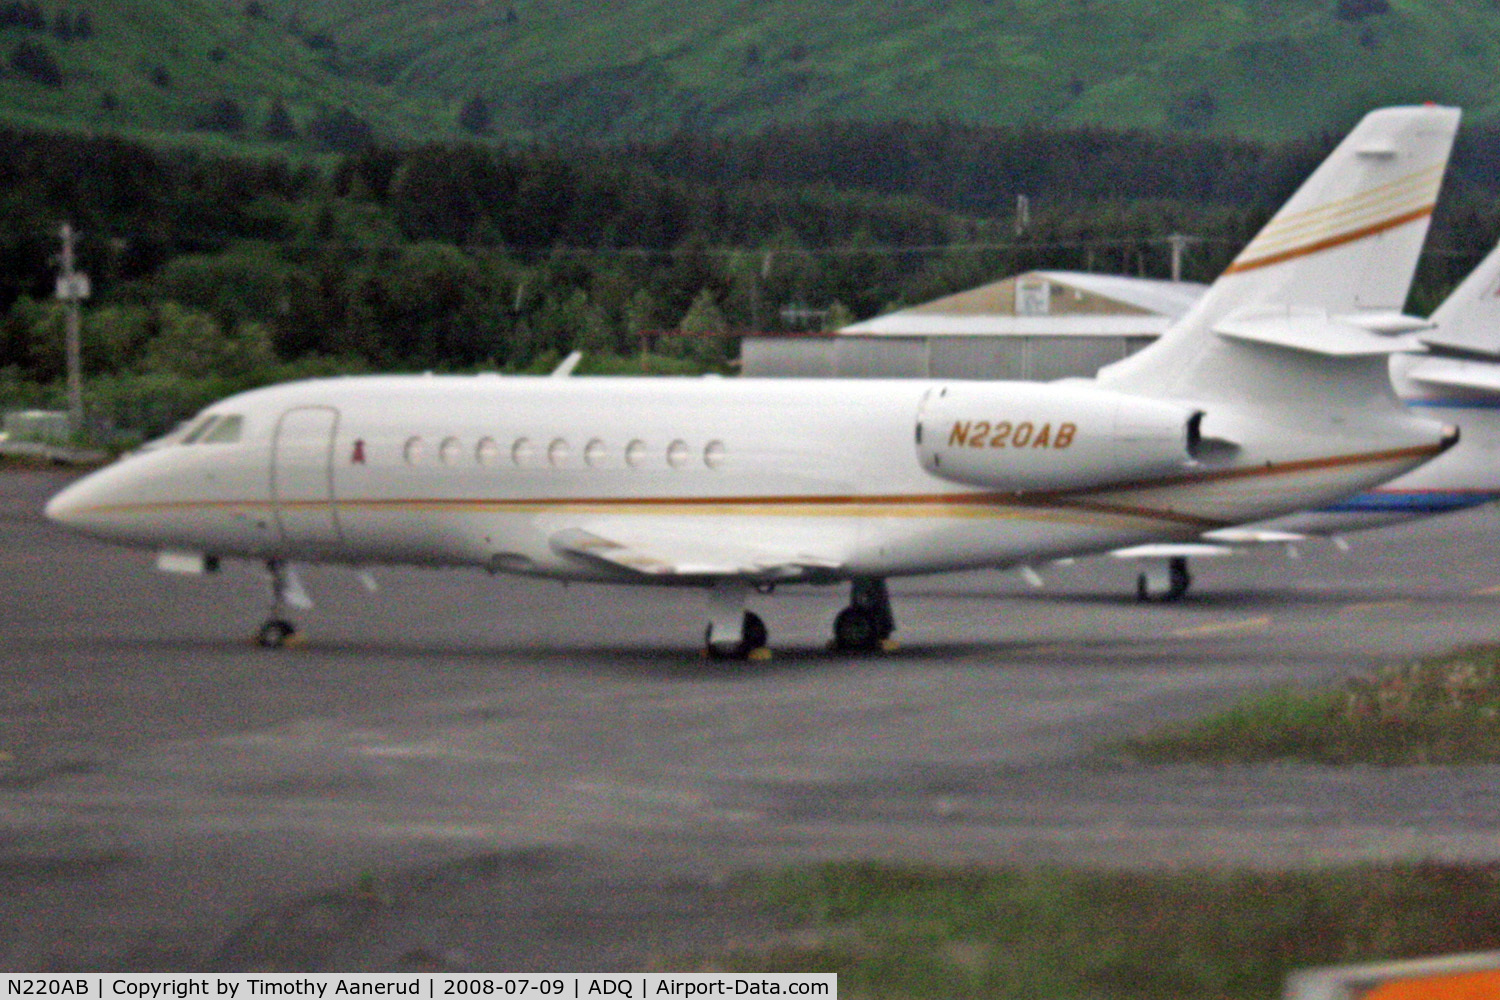 N220AB, 2001 Dassault Falcon 2000 C/N 170, Dassault Aviation FALCON 2000 serial 170, on the ramp at Kodiak, Alaska.